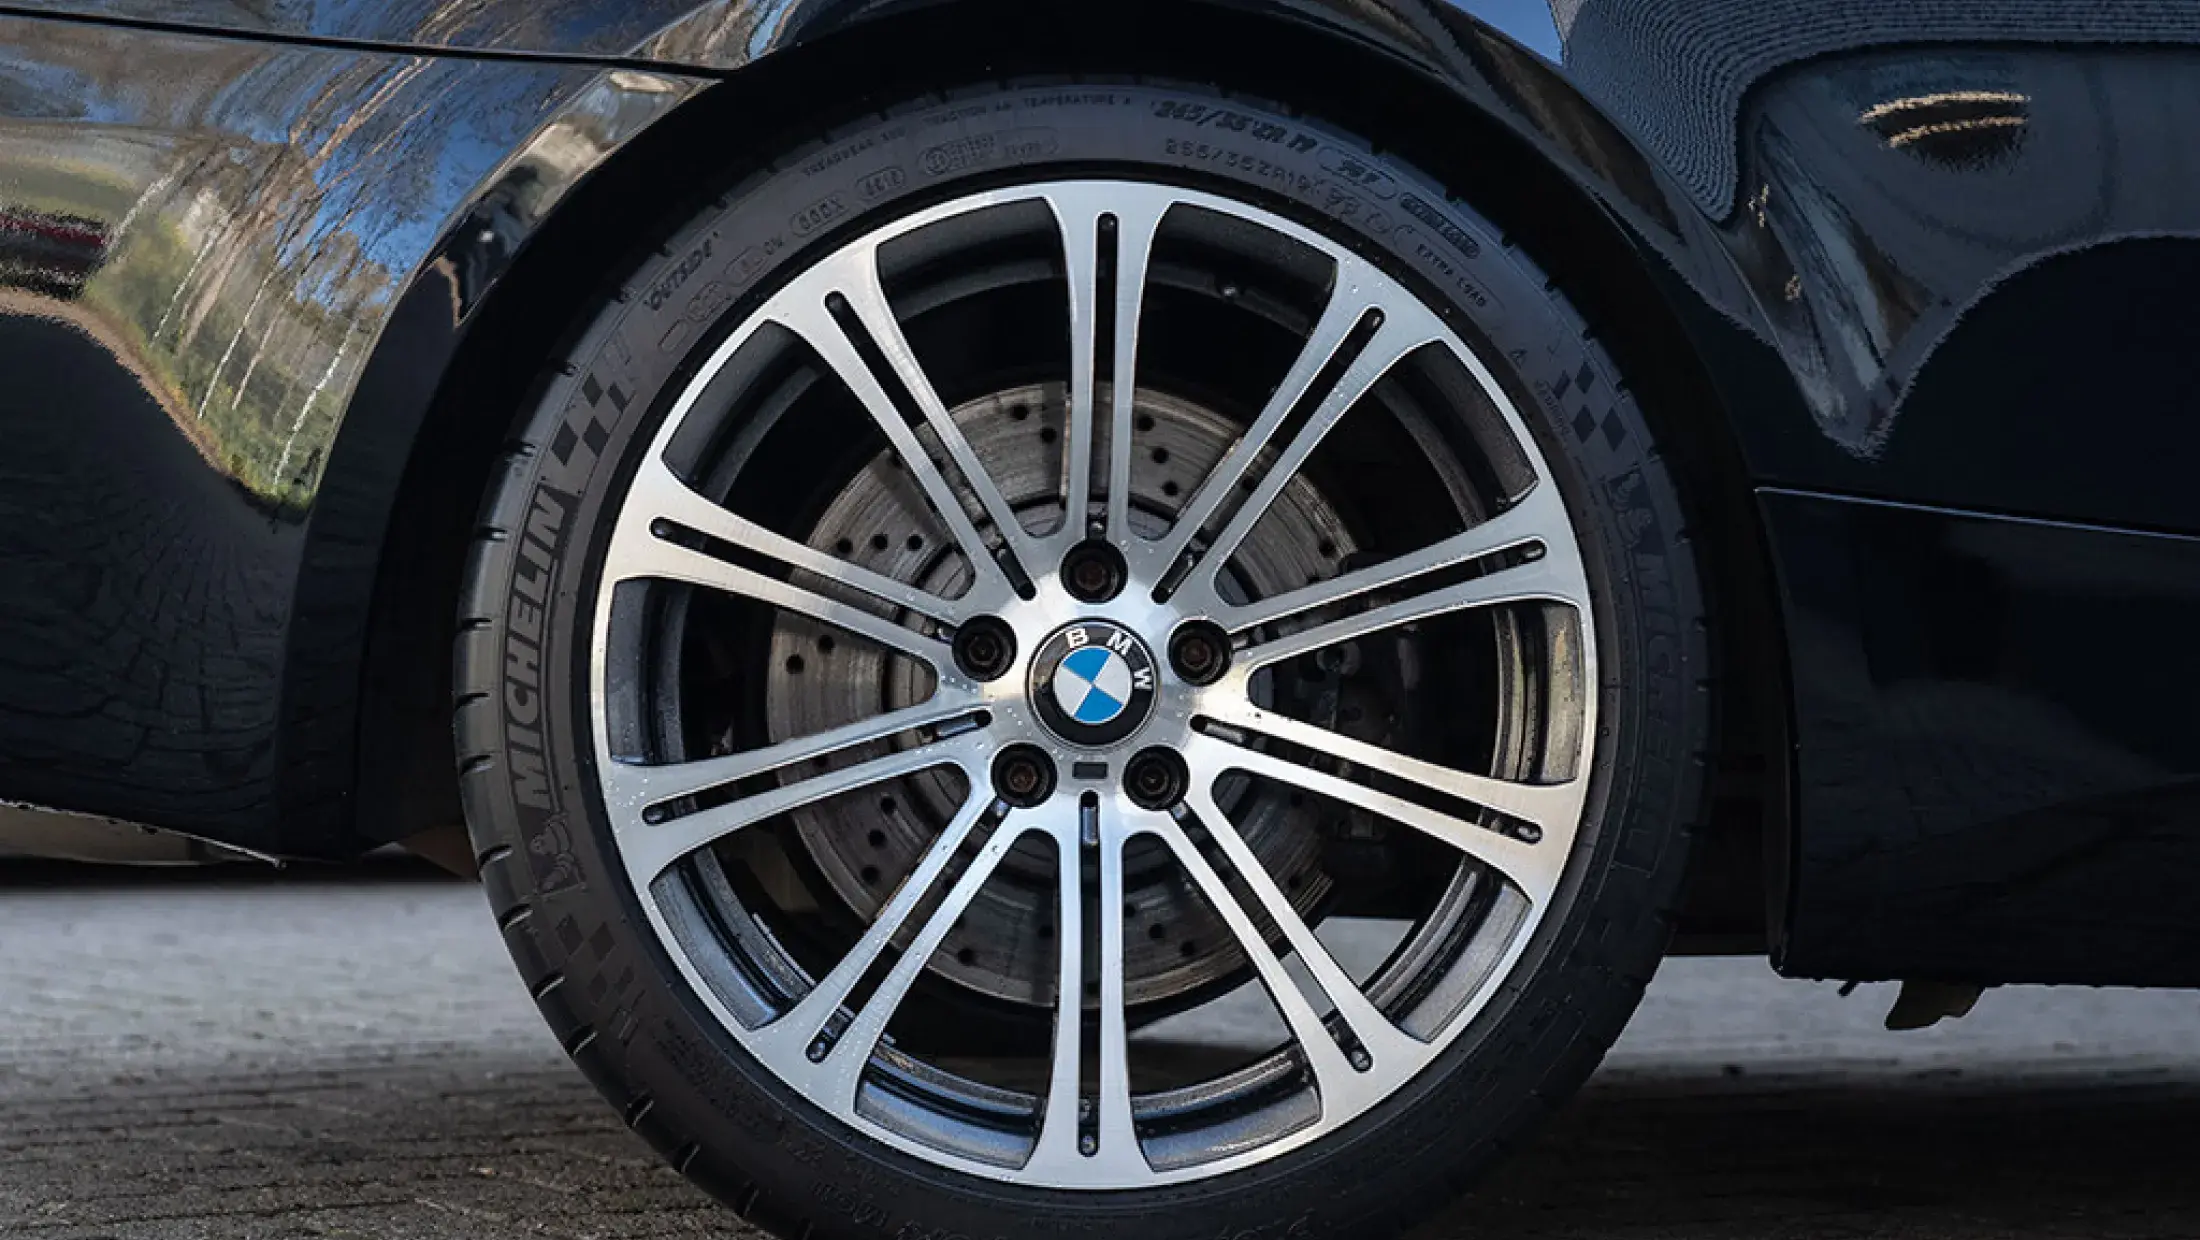 BMW M3 Coupé Jerez Schwarz Erweitere Lederausstattung Novillo Bambusbeige E92 Bergwerff